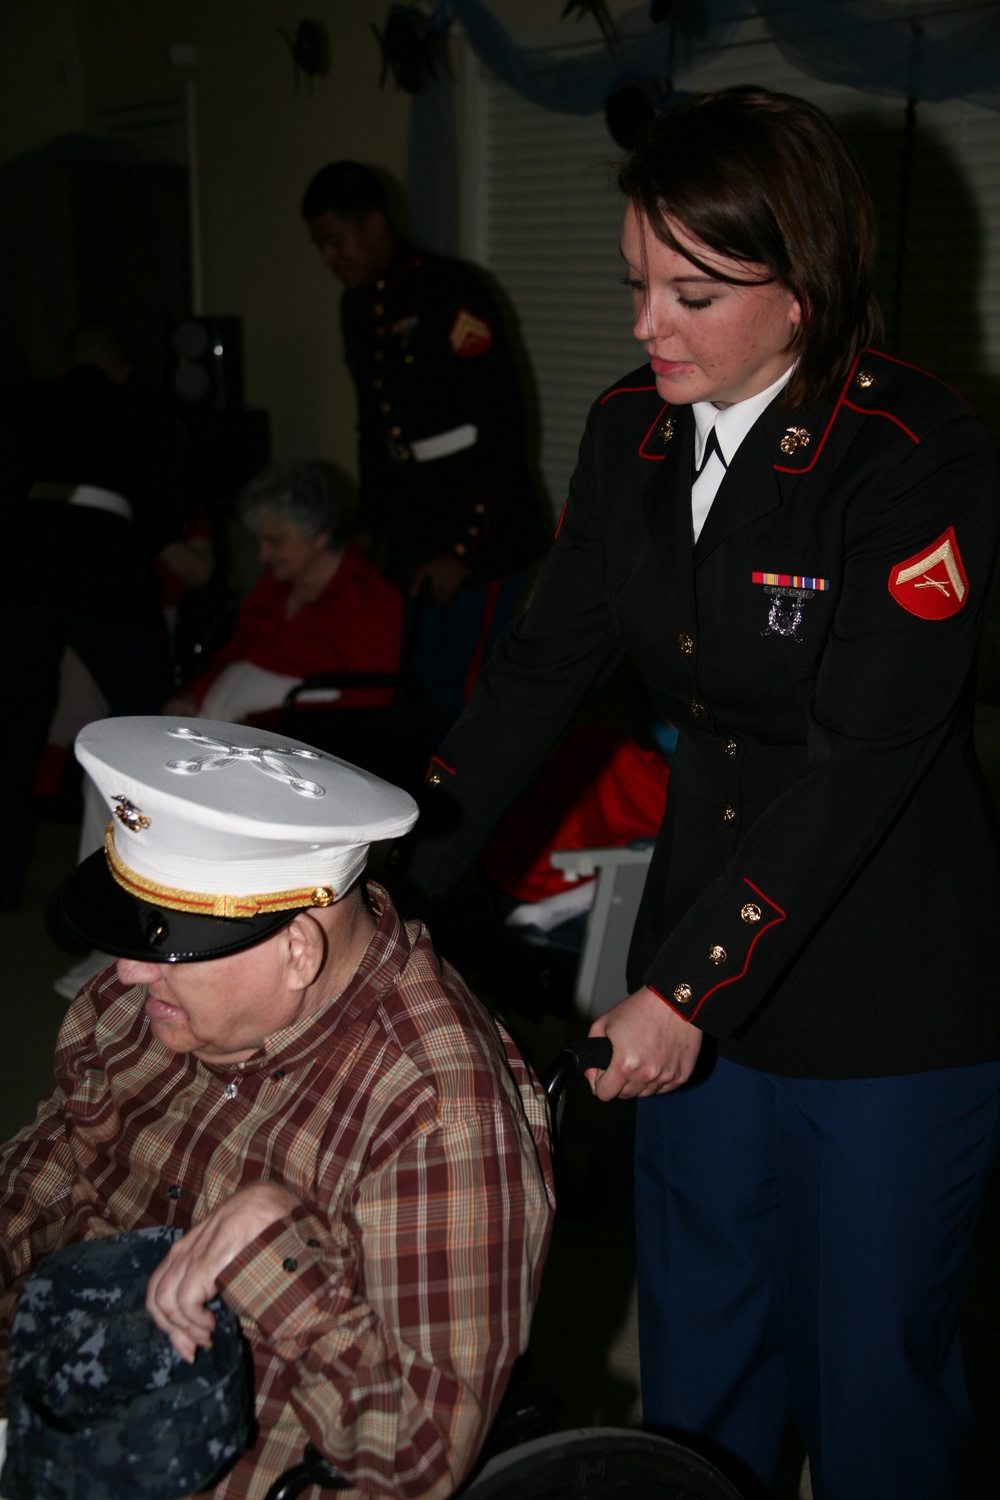 Marines volunteer as Valentine dates for elderly